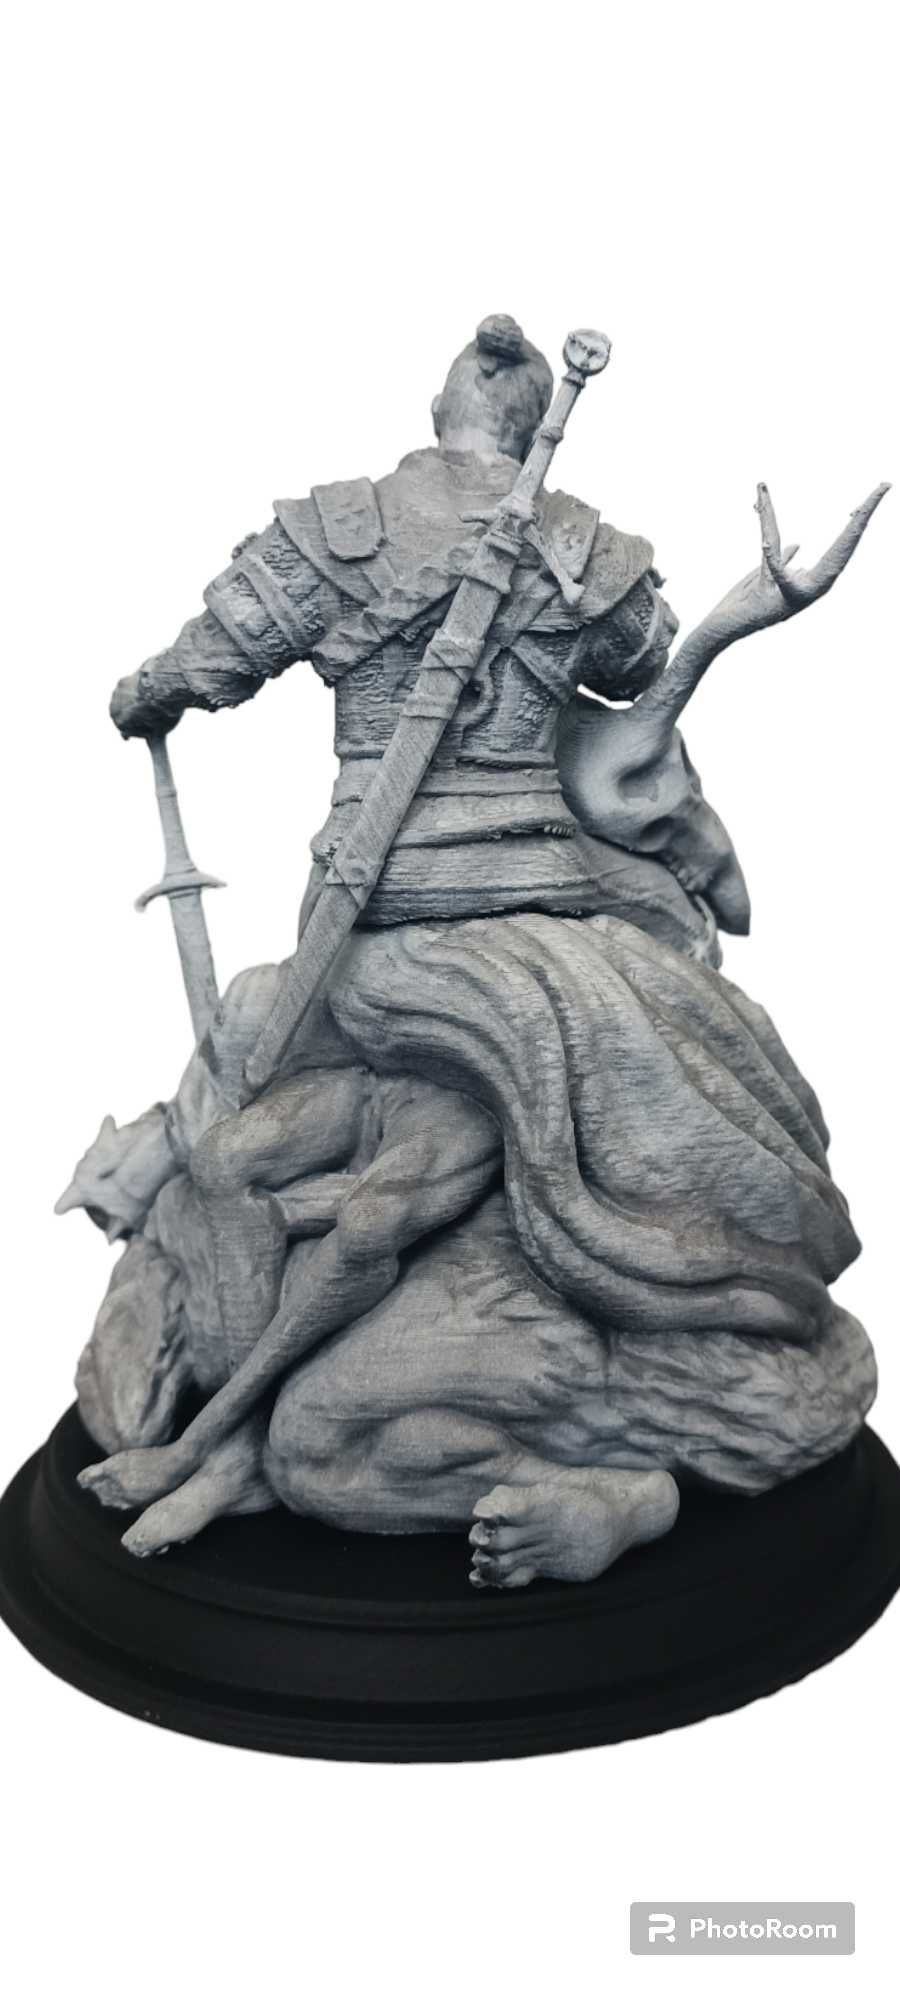 Model, figurka Geralt duża na podstawce. Wiedźmin